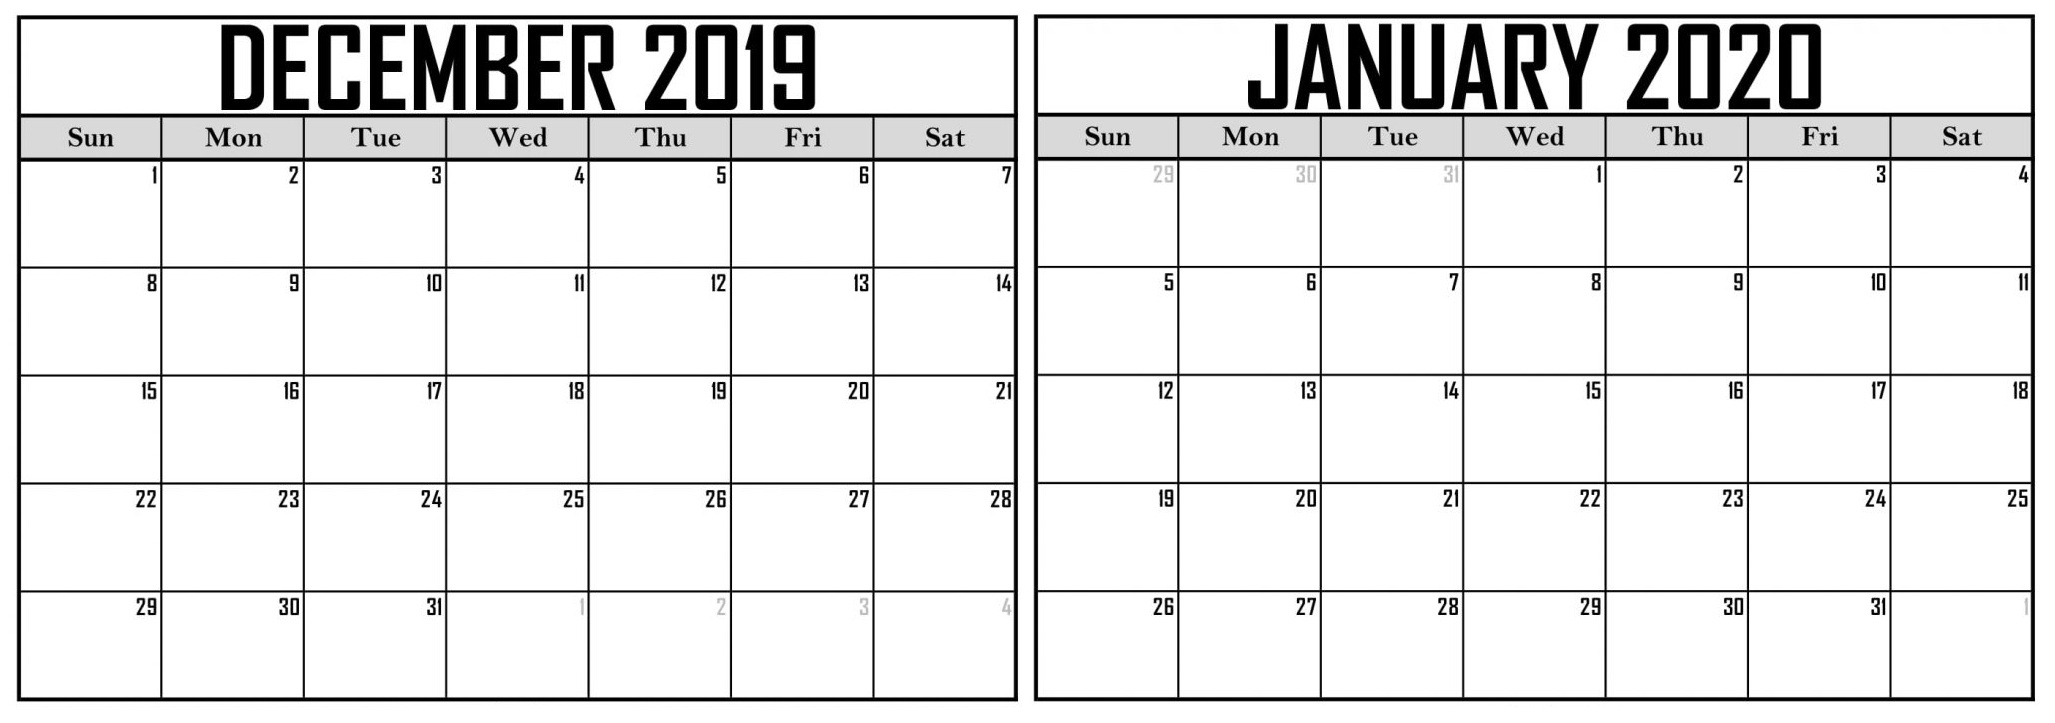 Calendar December 2019 January 2020 Template - 2019